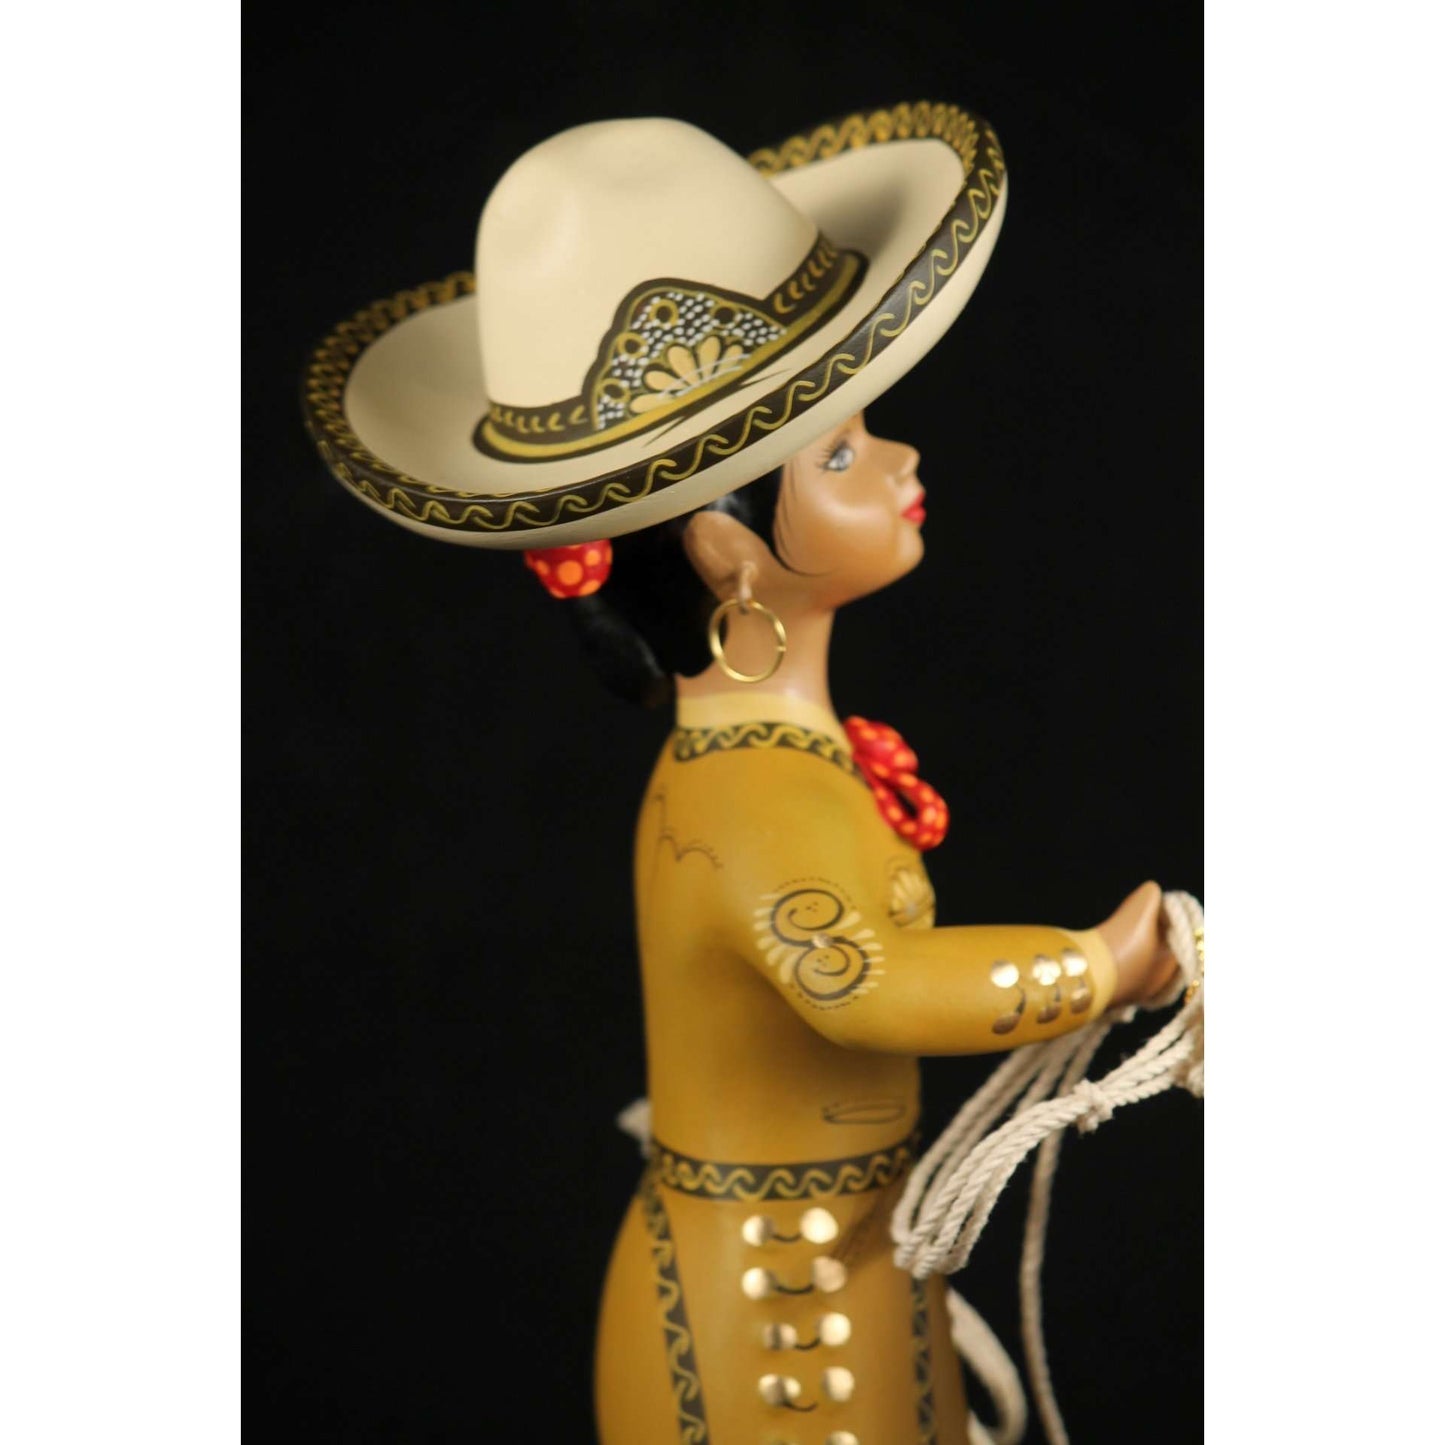 Charra Ocher "Lupita" Doll Ceramic Mexican Folk Art